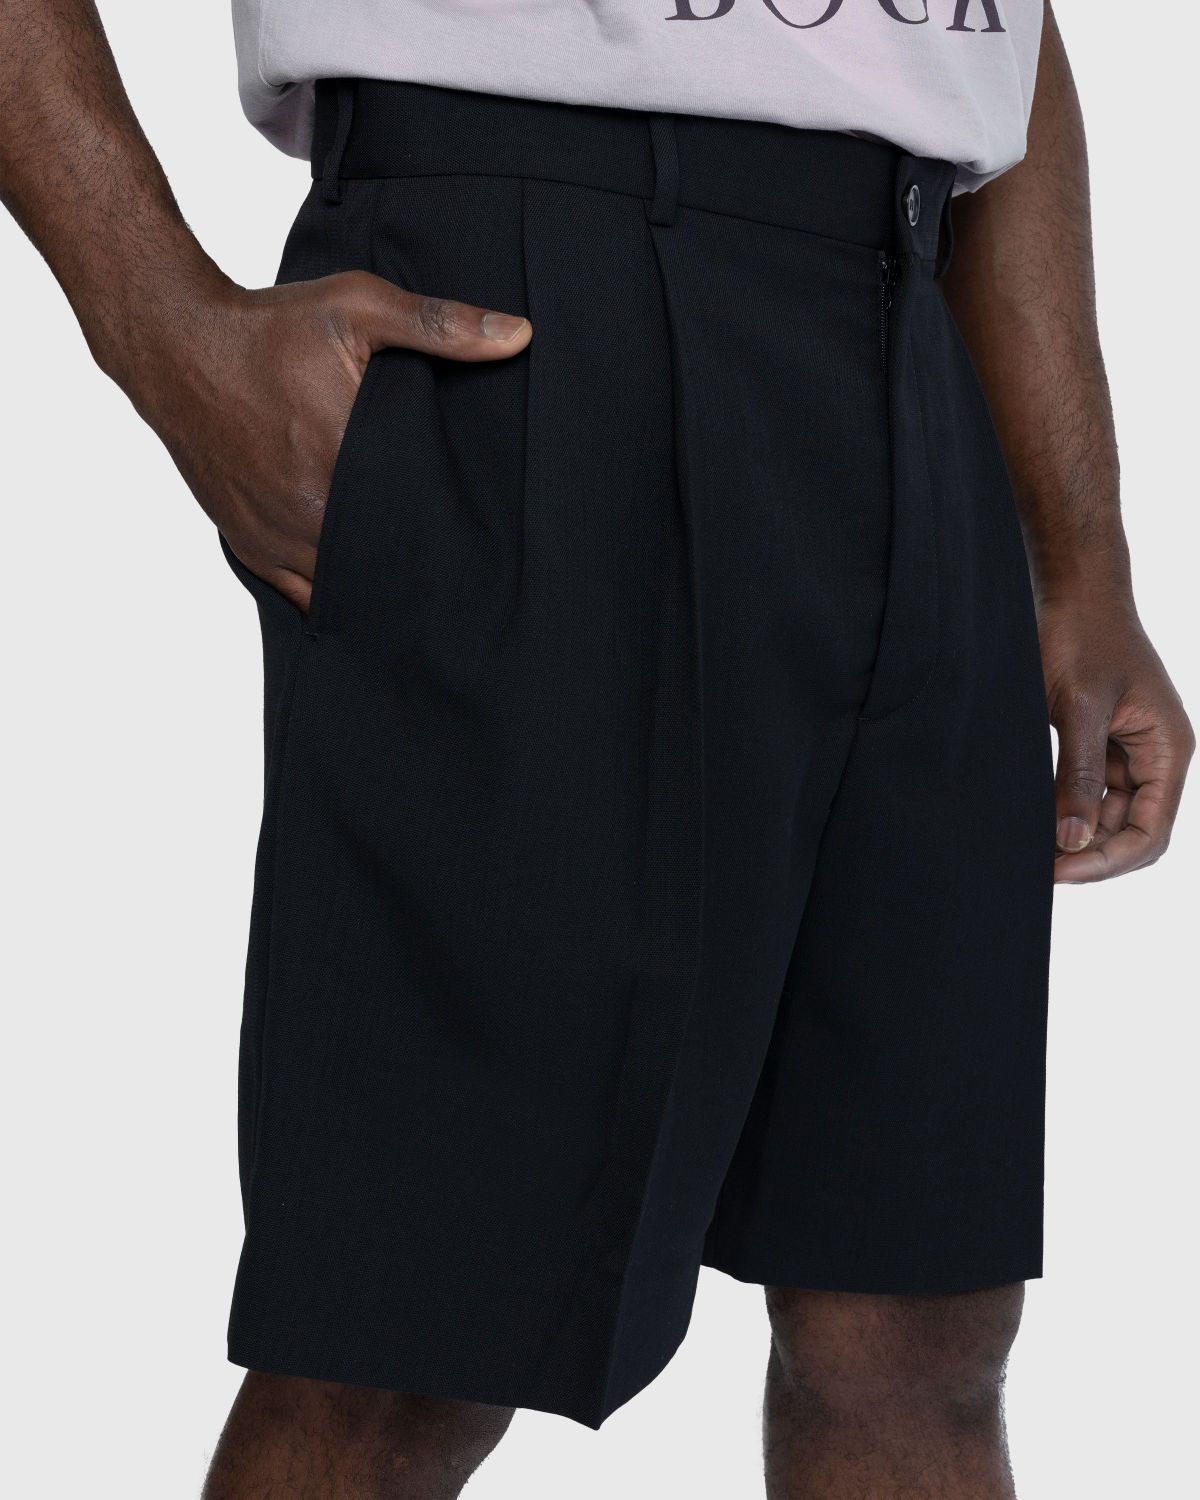 Acne Studios – Tailored Pleated Shorts Black - Shorts - Black - Image 6